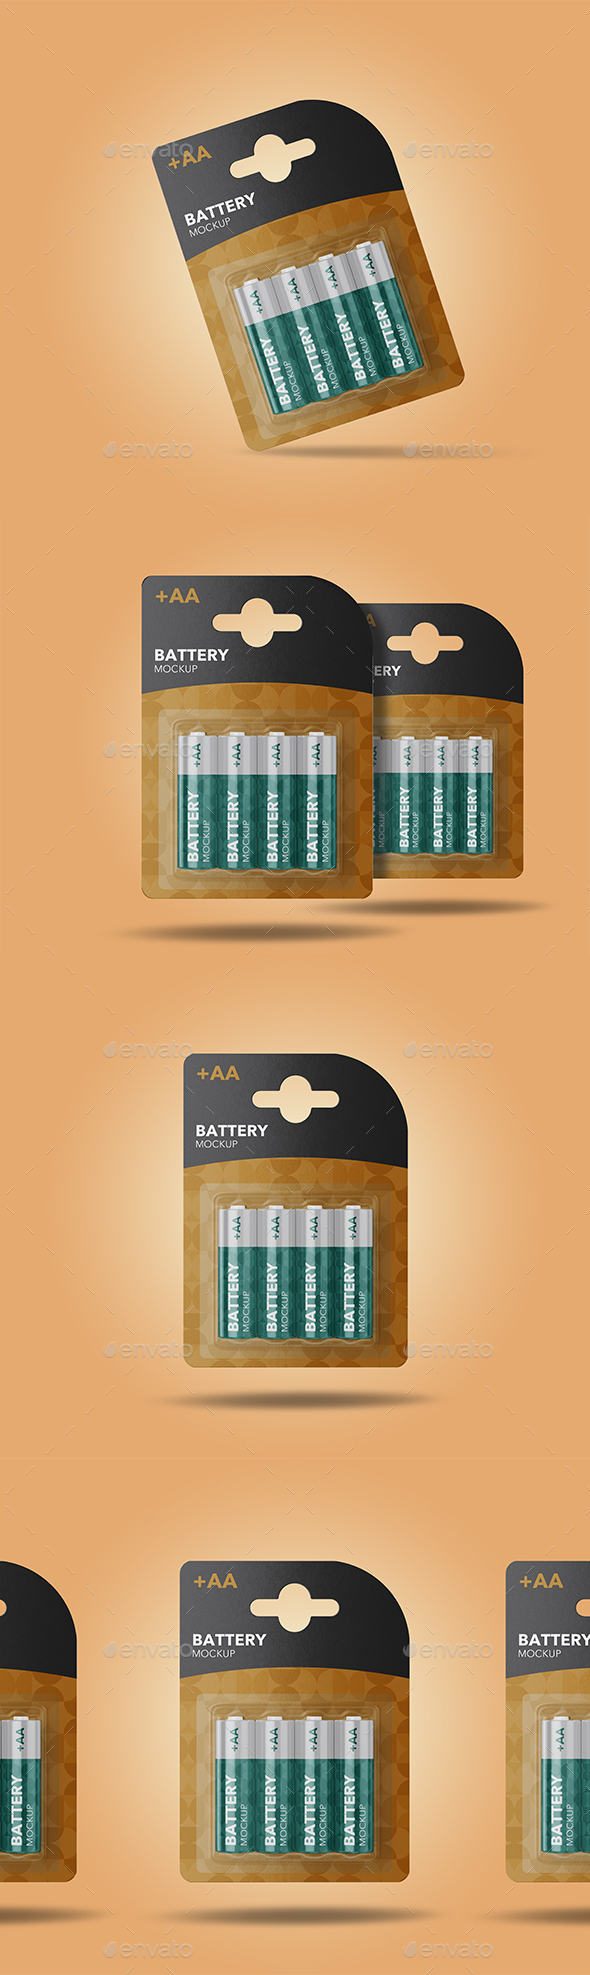 [DOWNLOAD]Battery Packaging Mockup